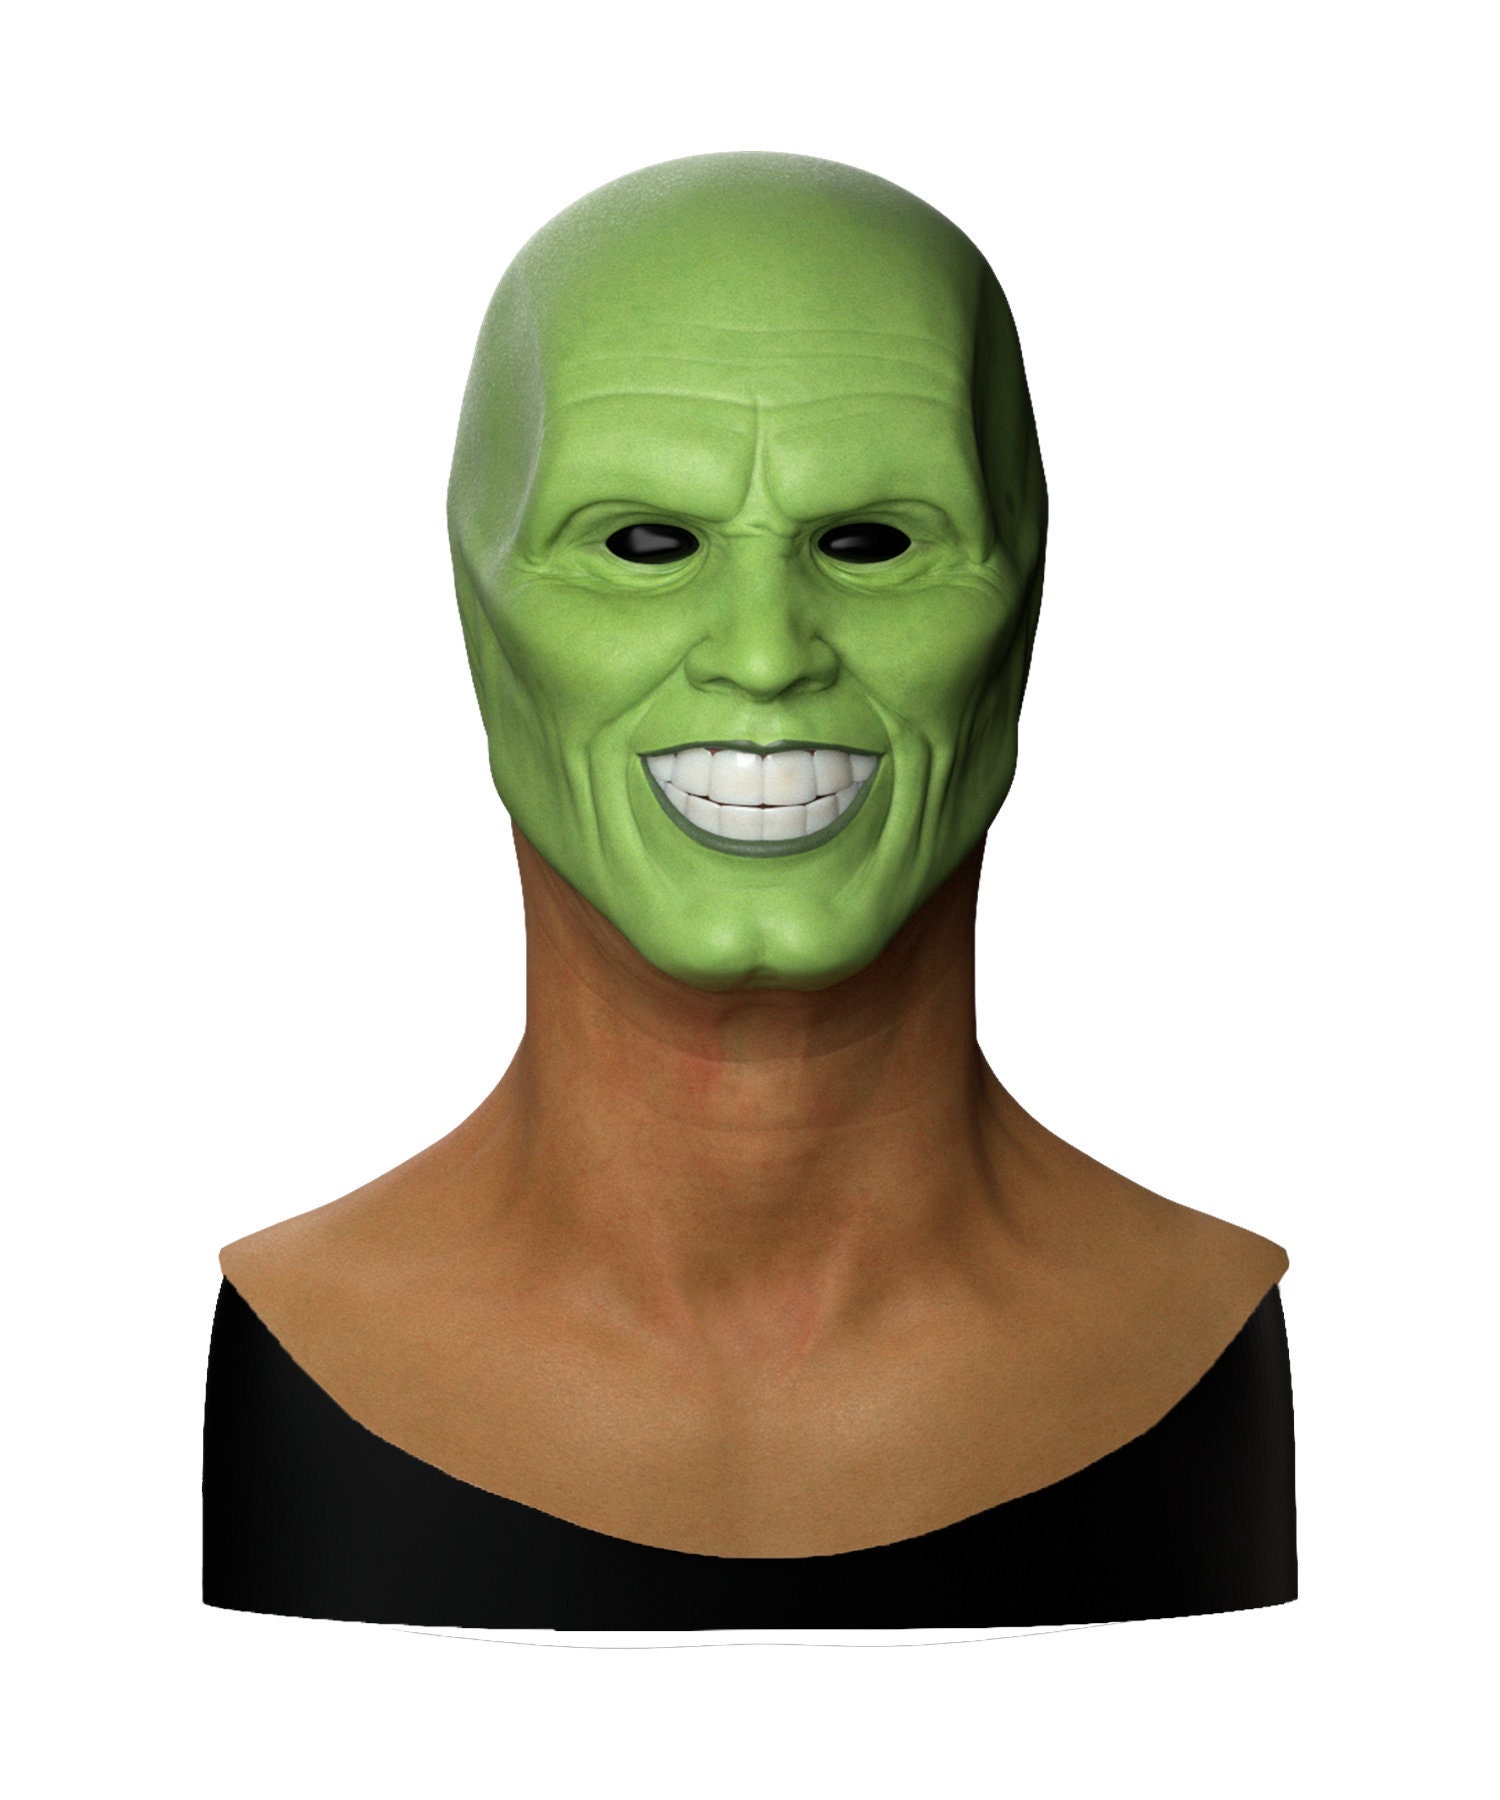 Silicone masks. Jim Carrey маска. Зелёная маска Джим Кери. Улыбка маски Джим Керри. Маска улыбается Джим Керри.